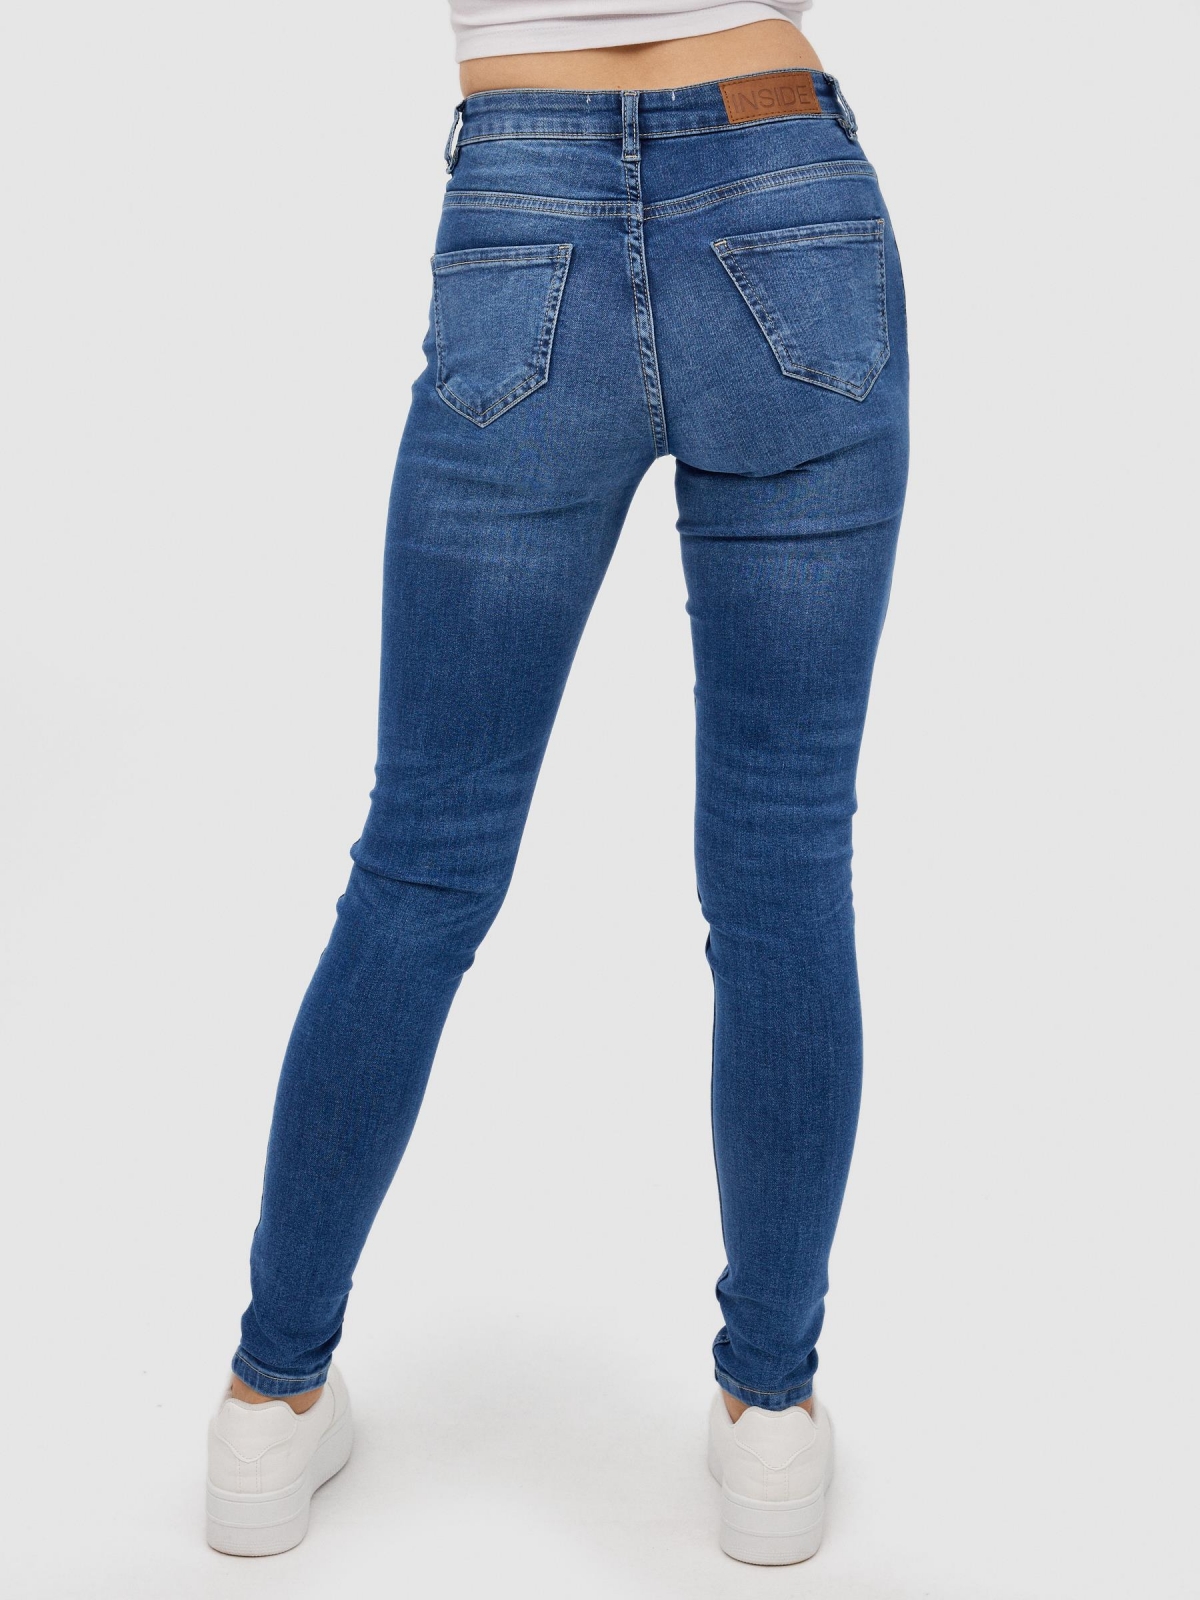 Denim skinny jeans medium rise blue middle back view